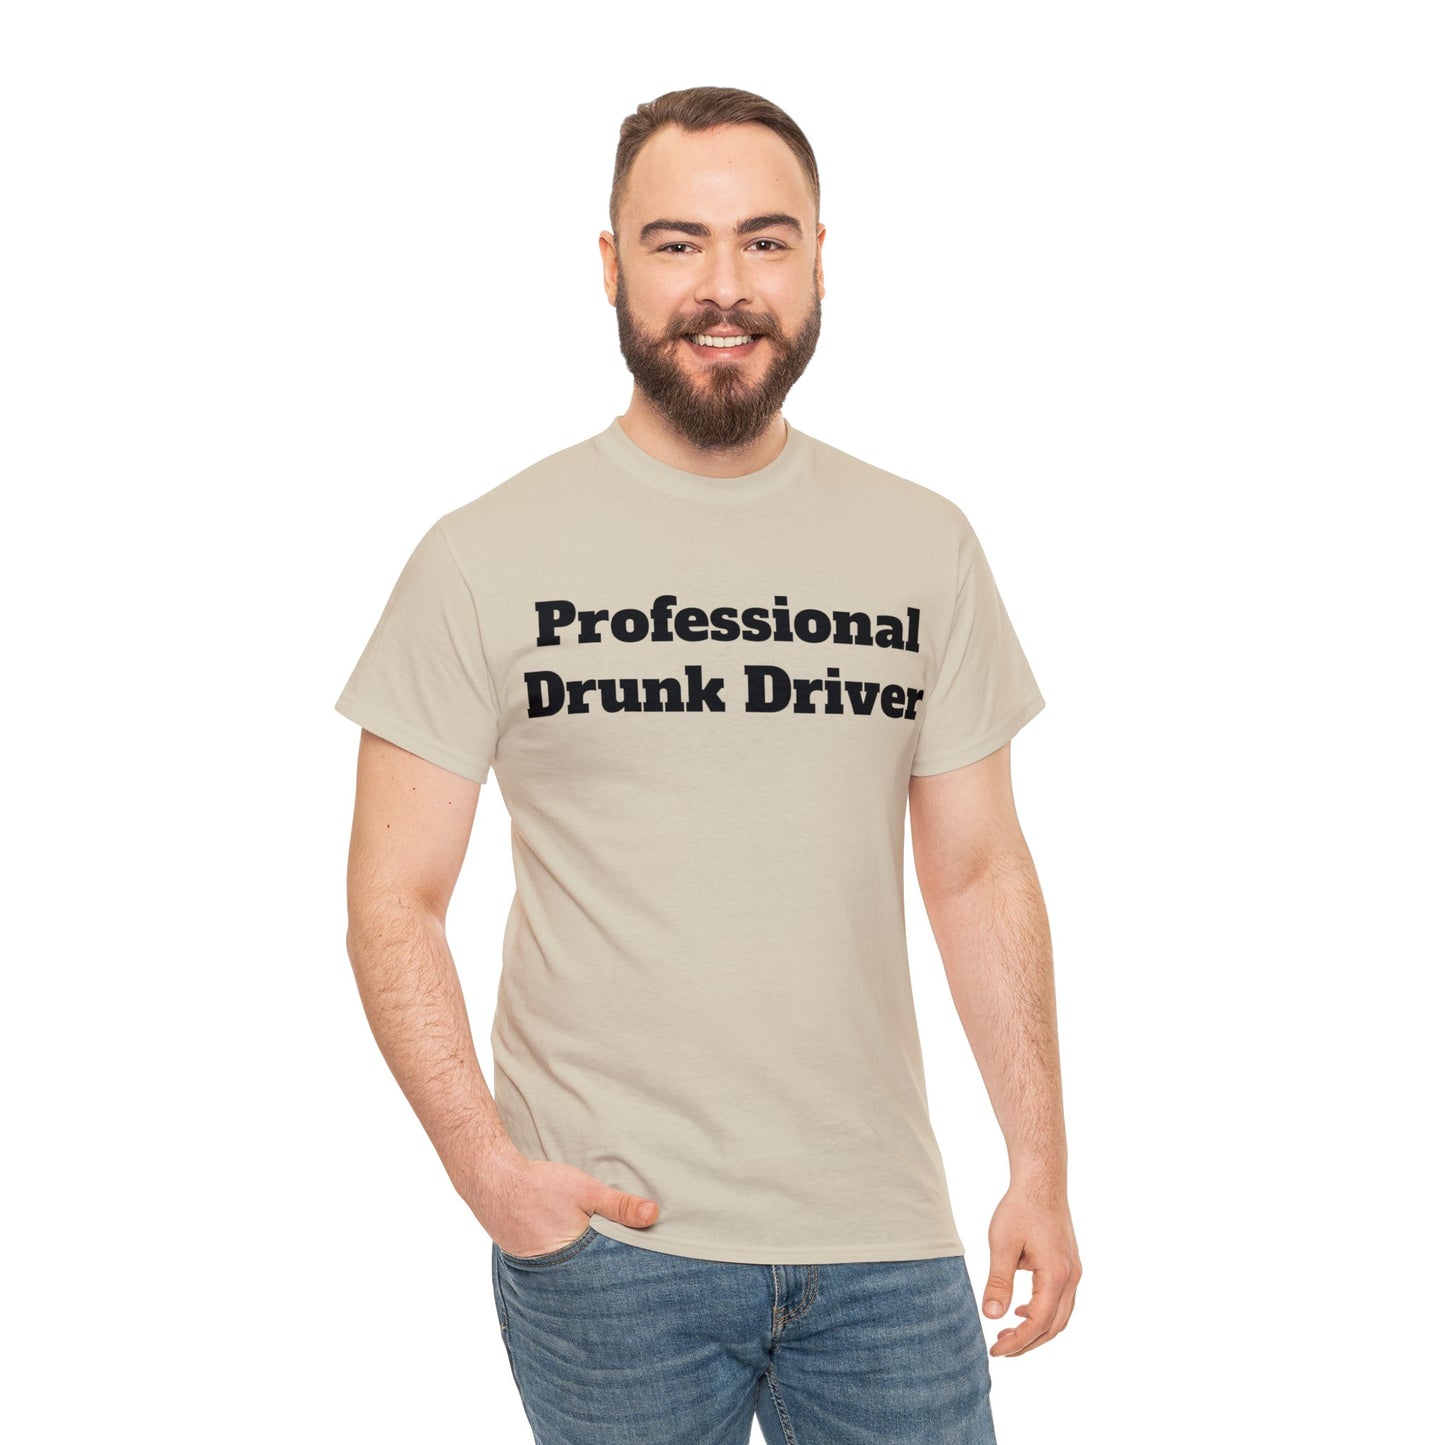 Professional Drunk Driver